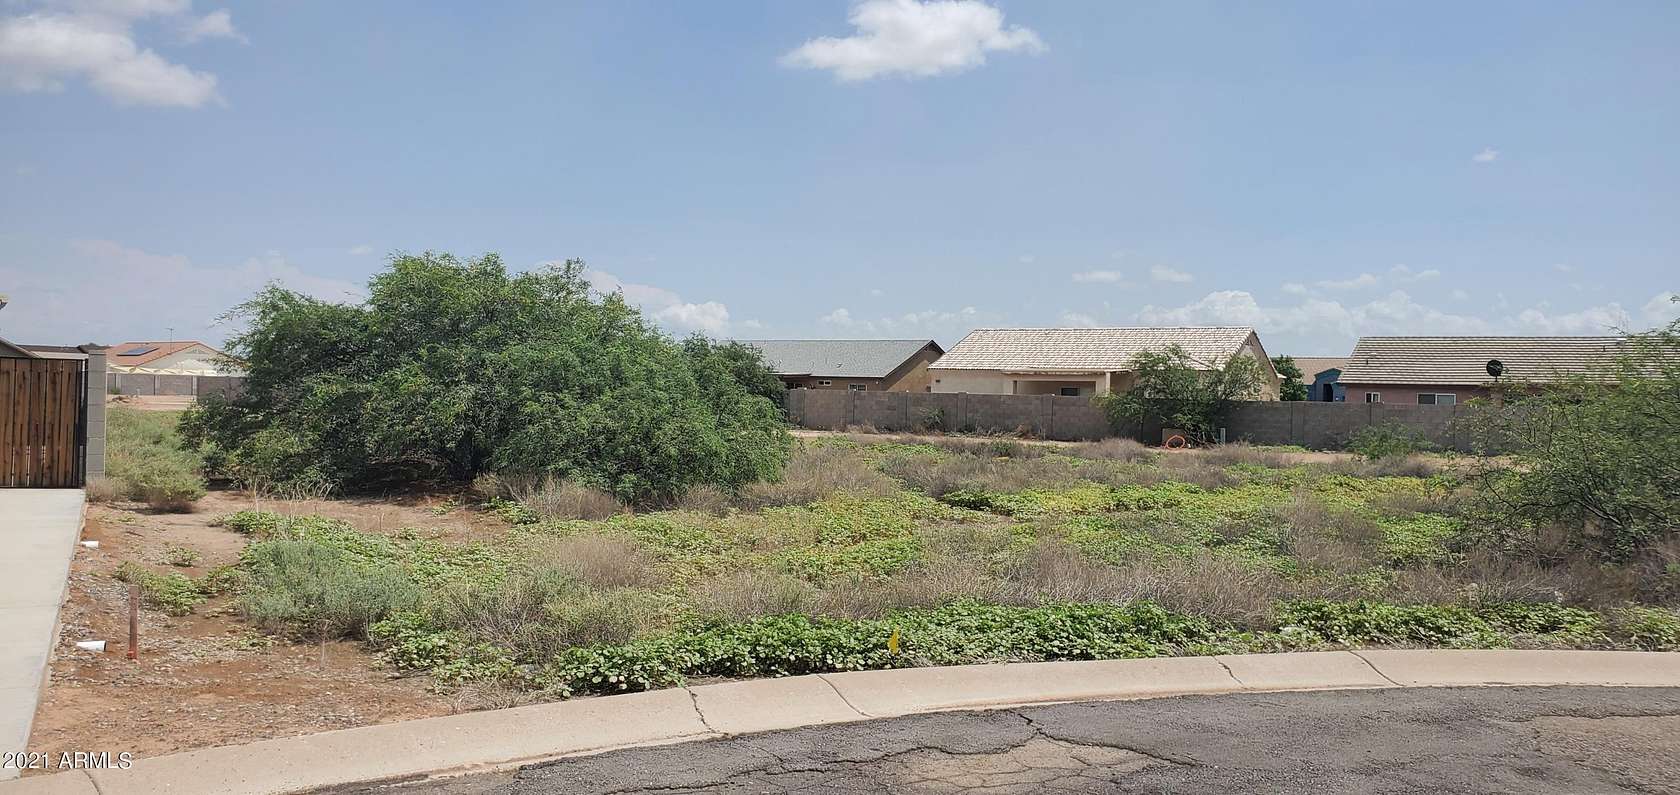 0.39 Acres of Residential Land for Sale in Arizona City, Arizona